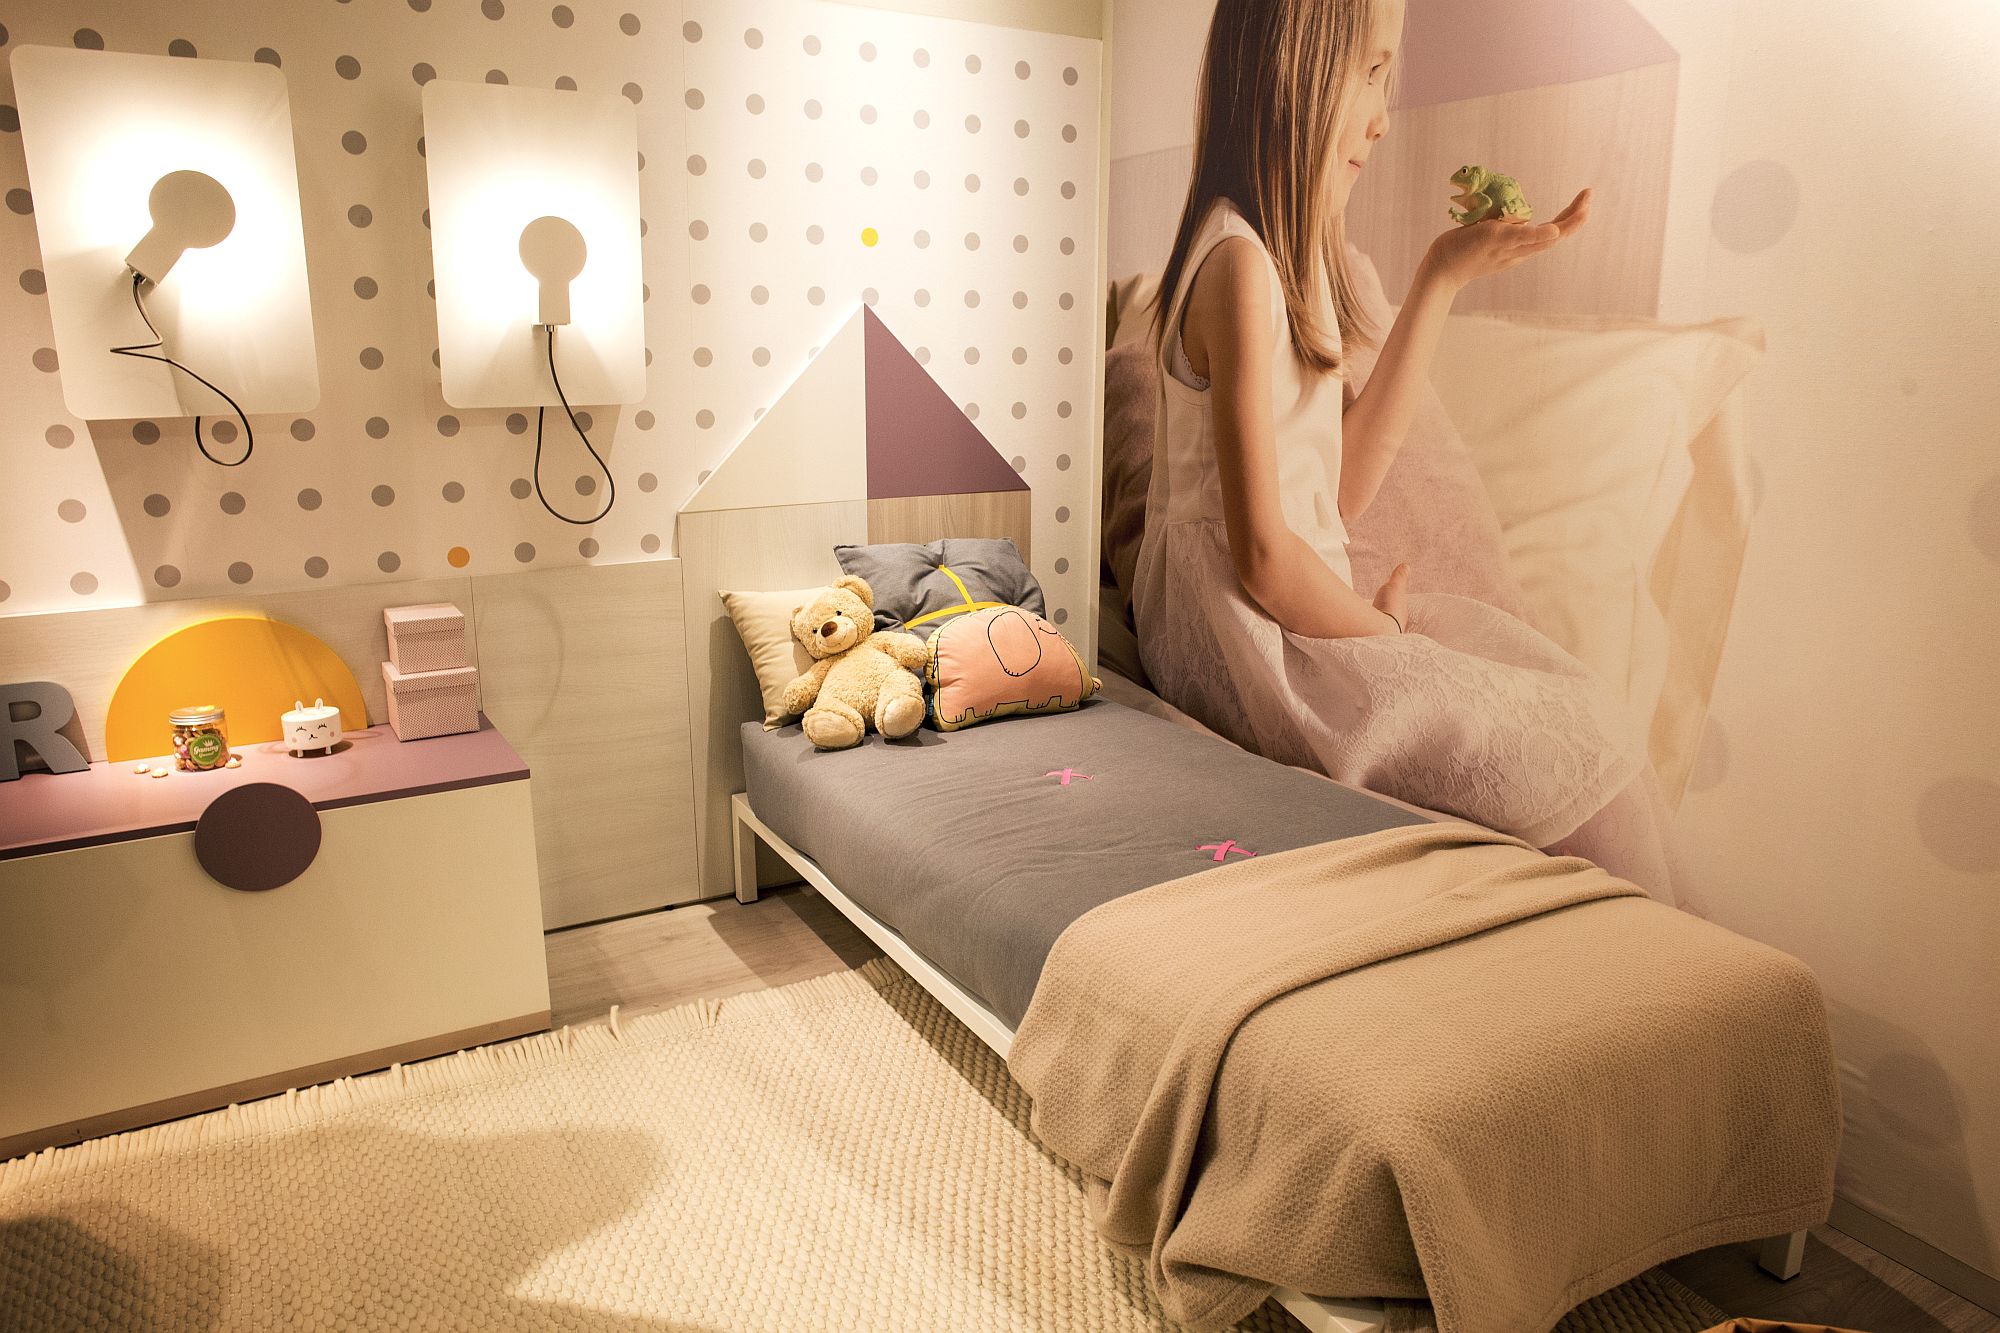 Modern girls' bedroom with fun patterns